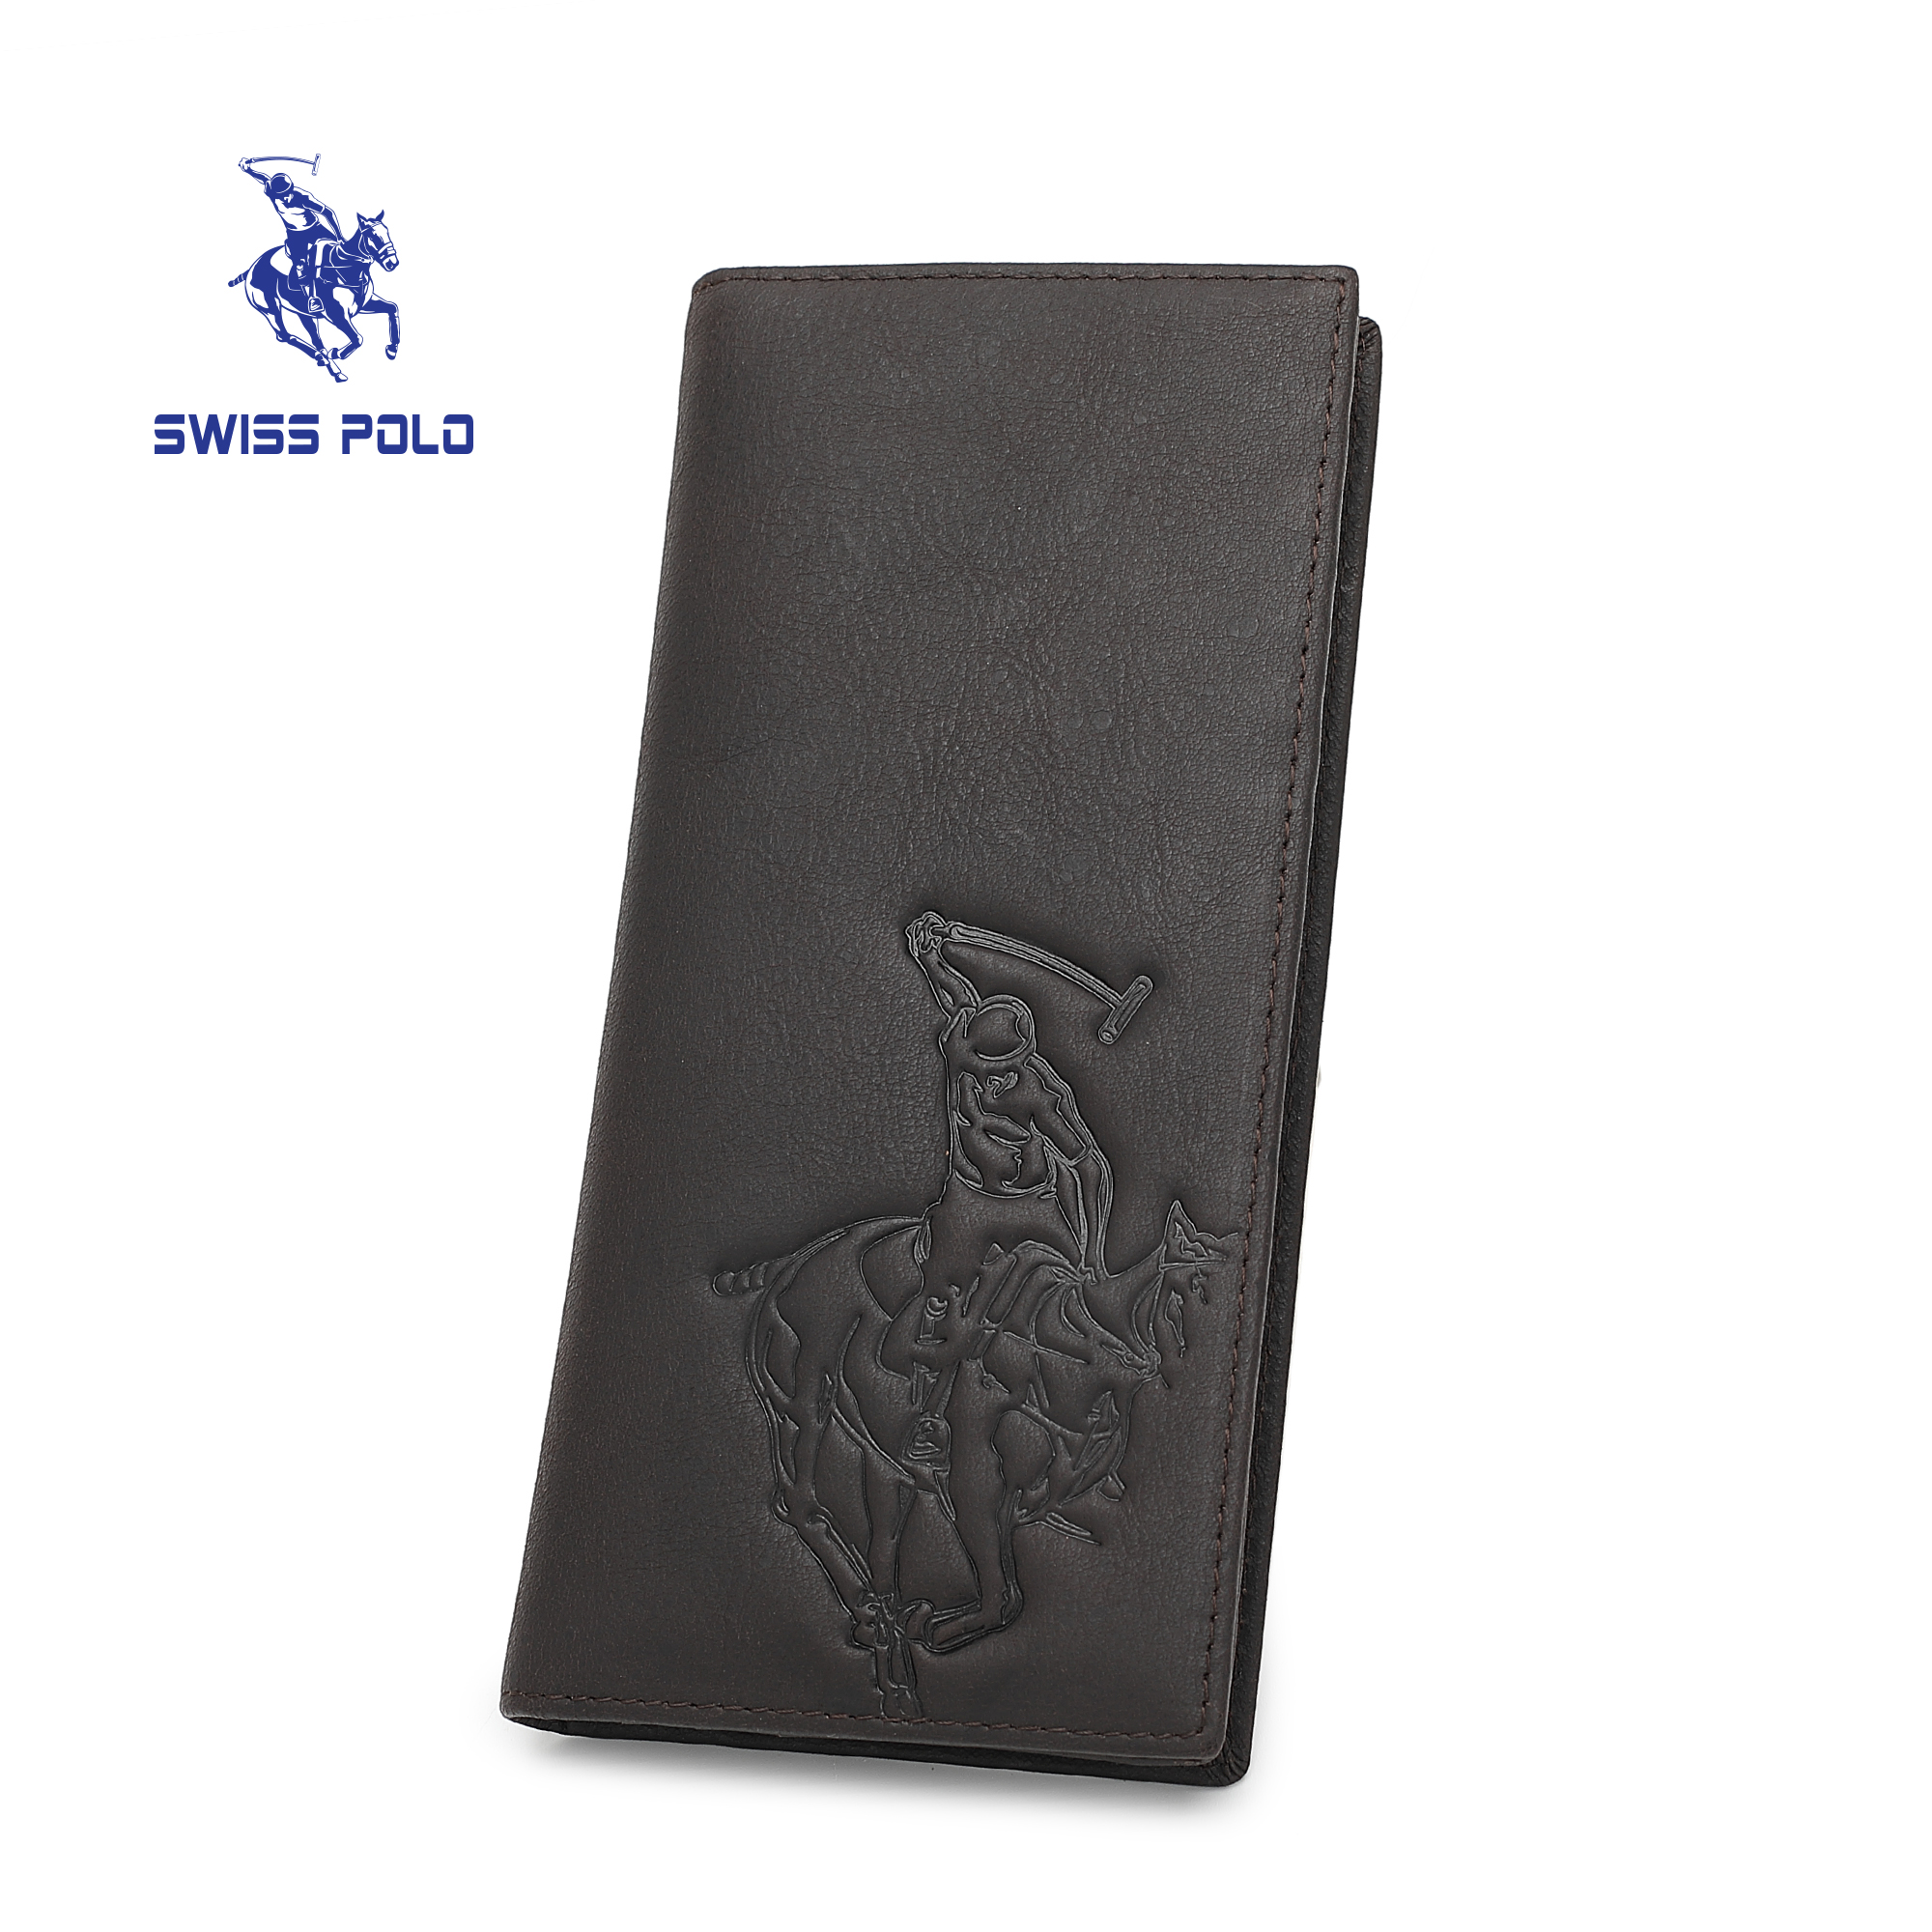 SWISS POLO Genuine Leather RFID Long Wallet SW 178-1 COFFEE